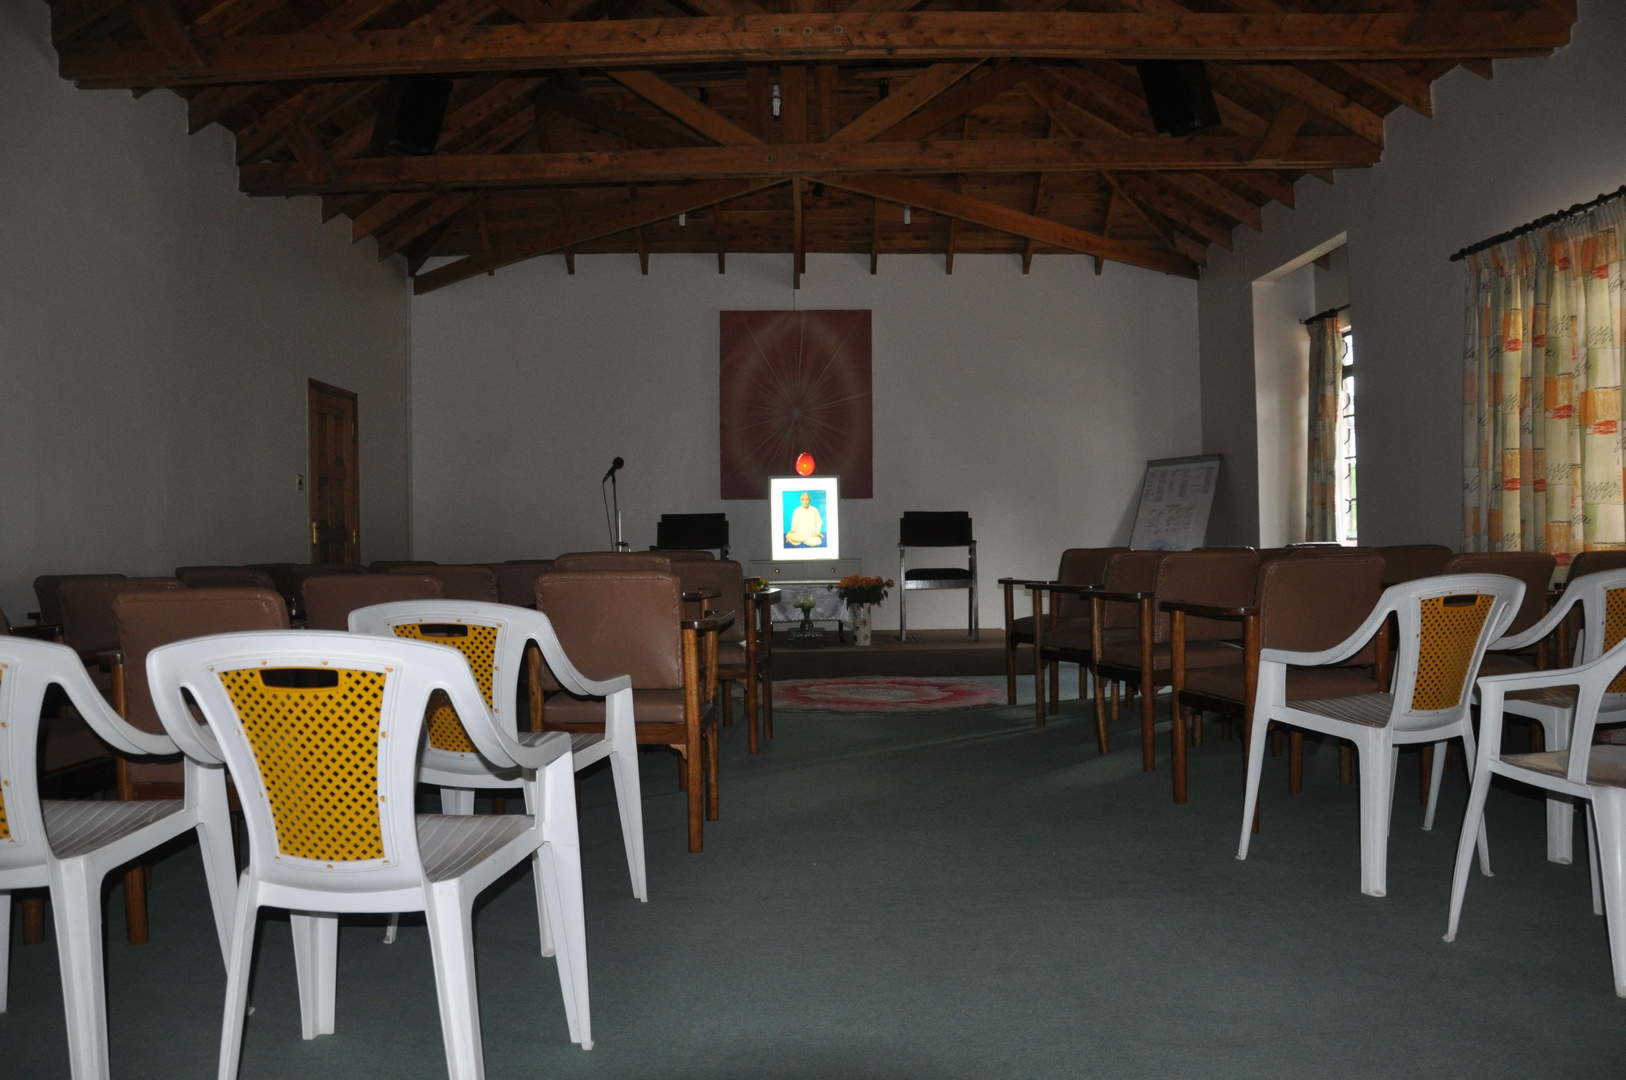 Brahma kumaris serve africa retreat centre - nairobi - 8